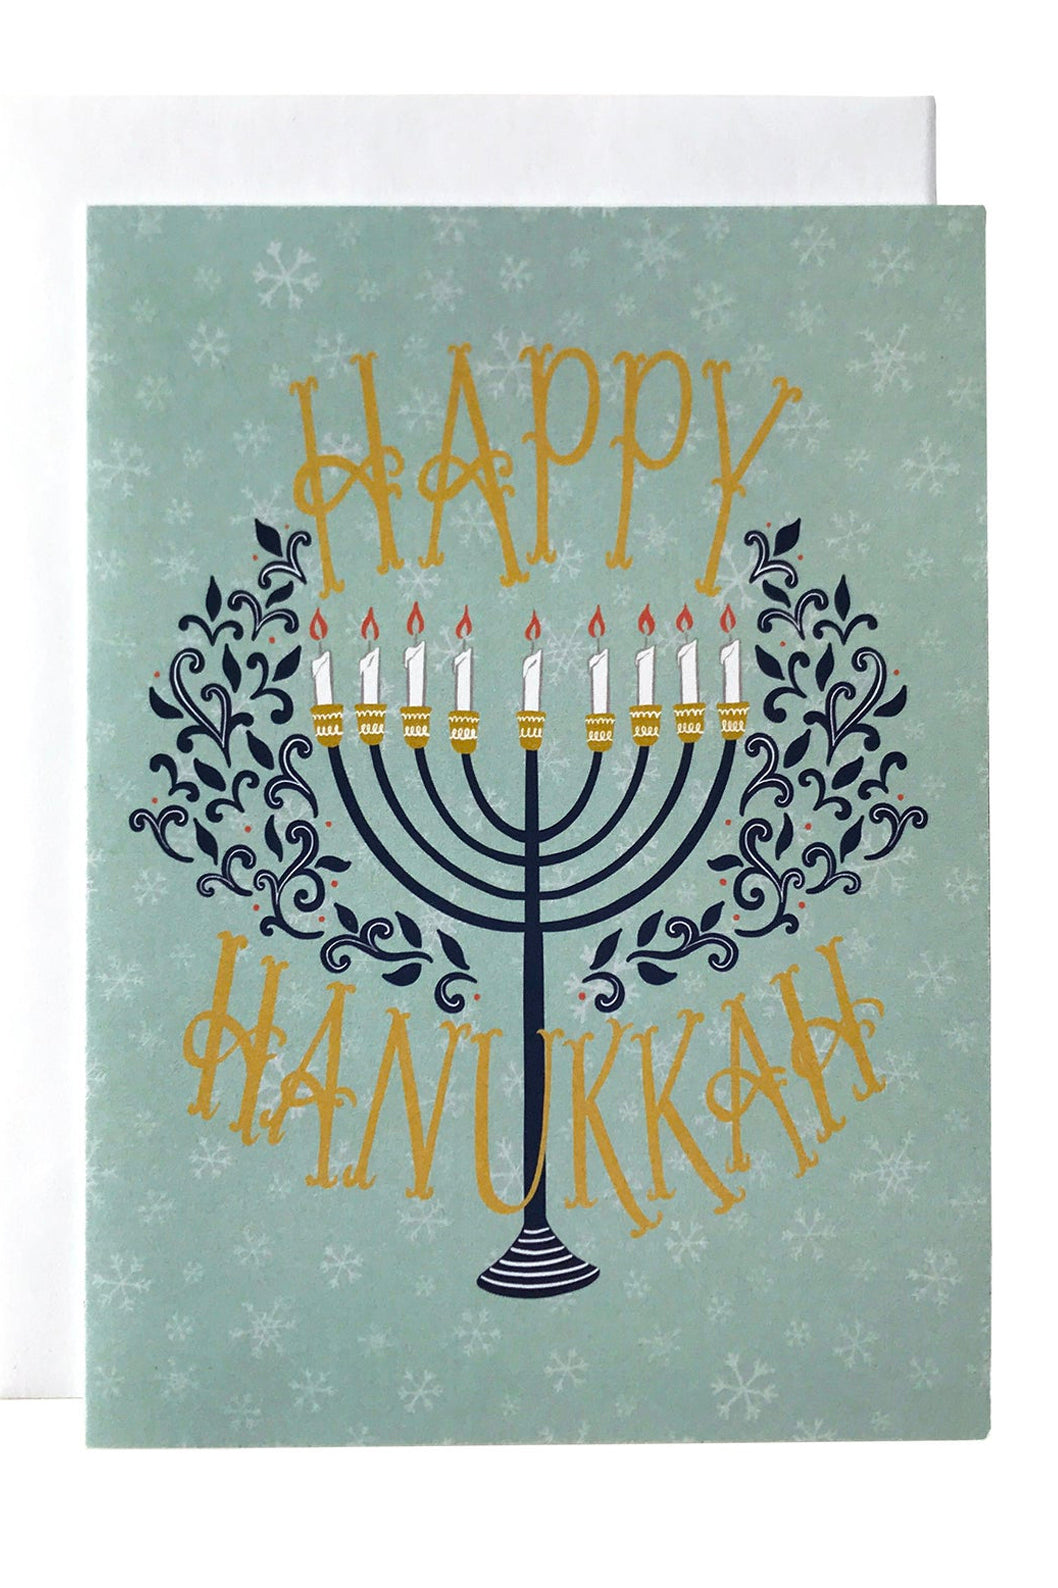 Happy Hanukkah Card - 5 Pack